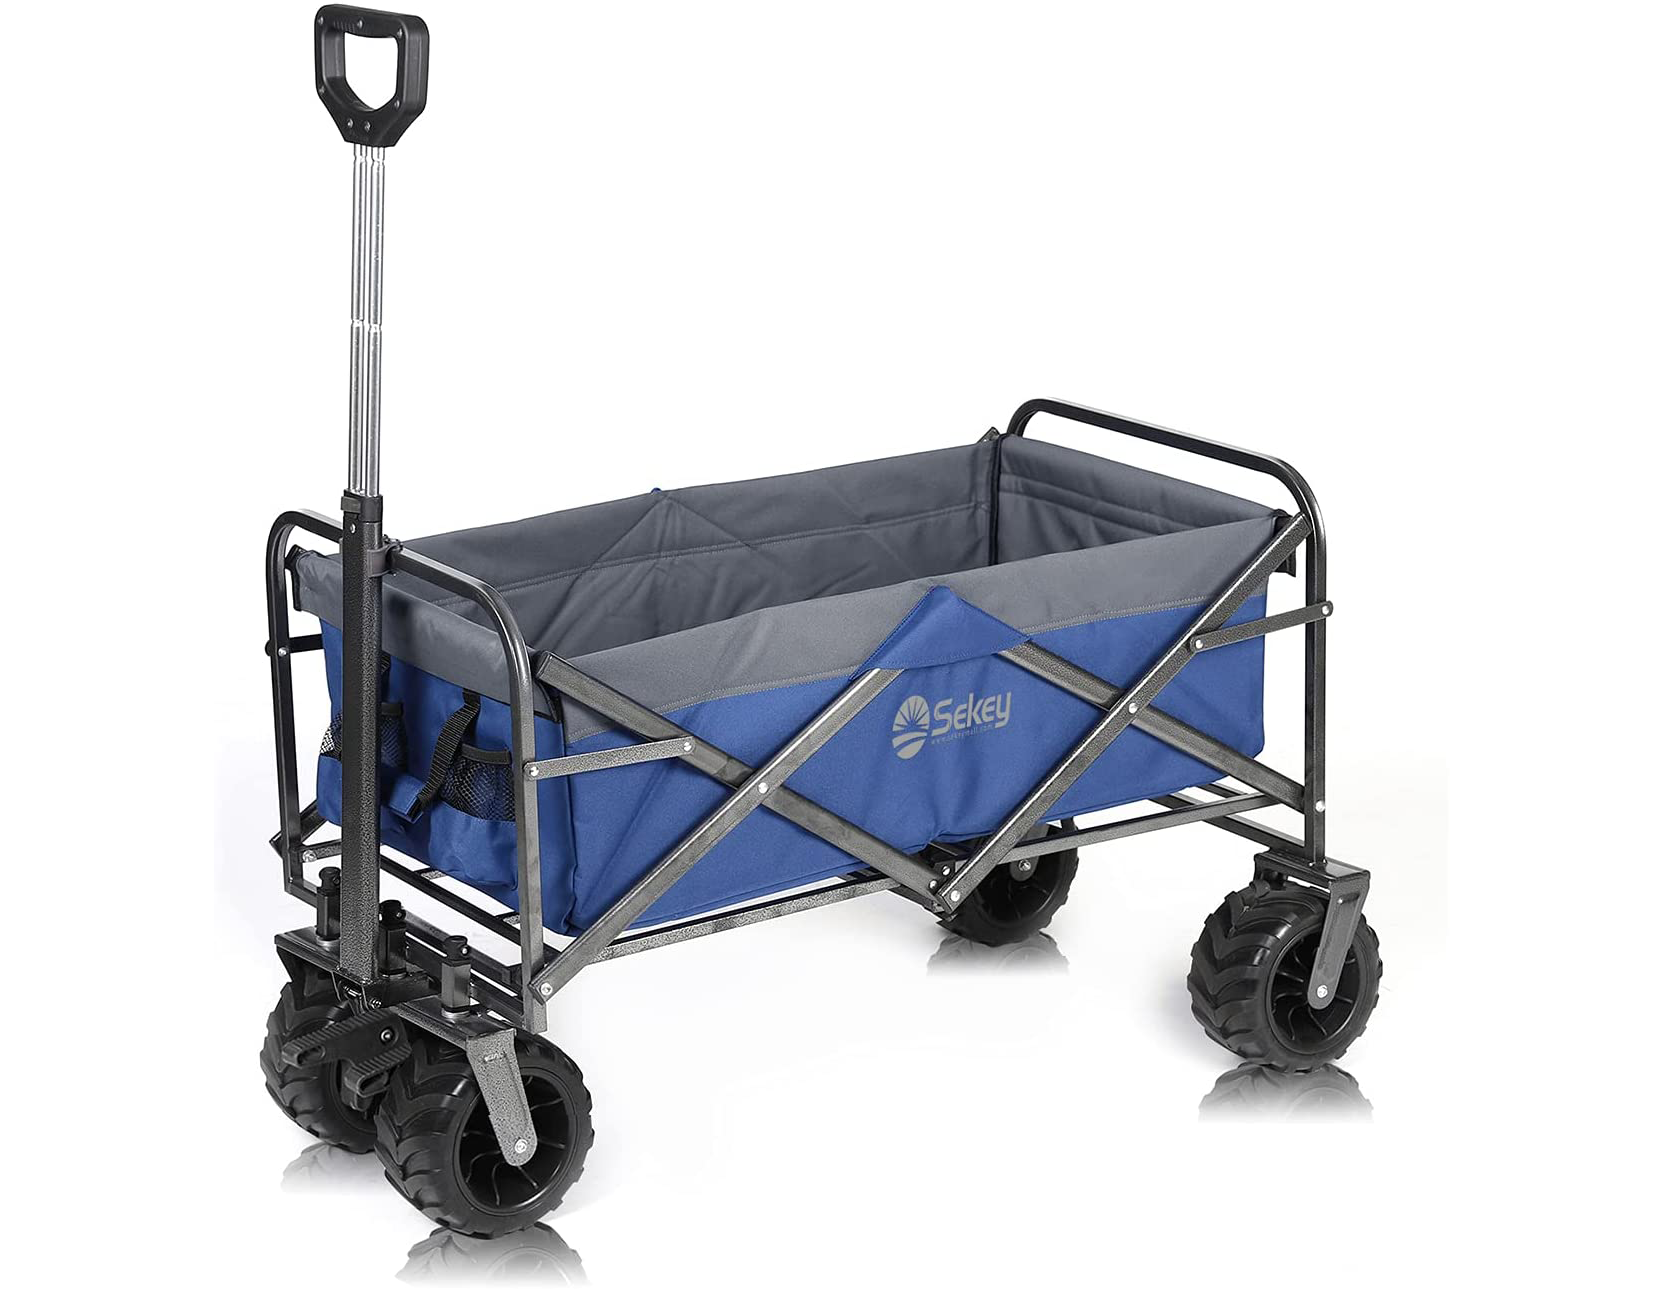 Heavy Duty Foldable Wagon Sekey Collapsible Folding Wagon Cart with Brake Large Capacity Utility Beach Wagon with All Terrain Wheels Black 